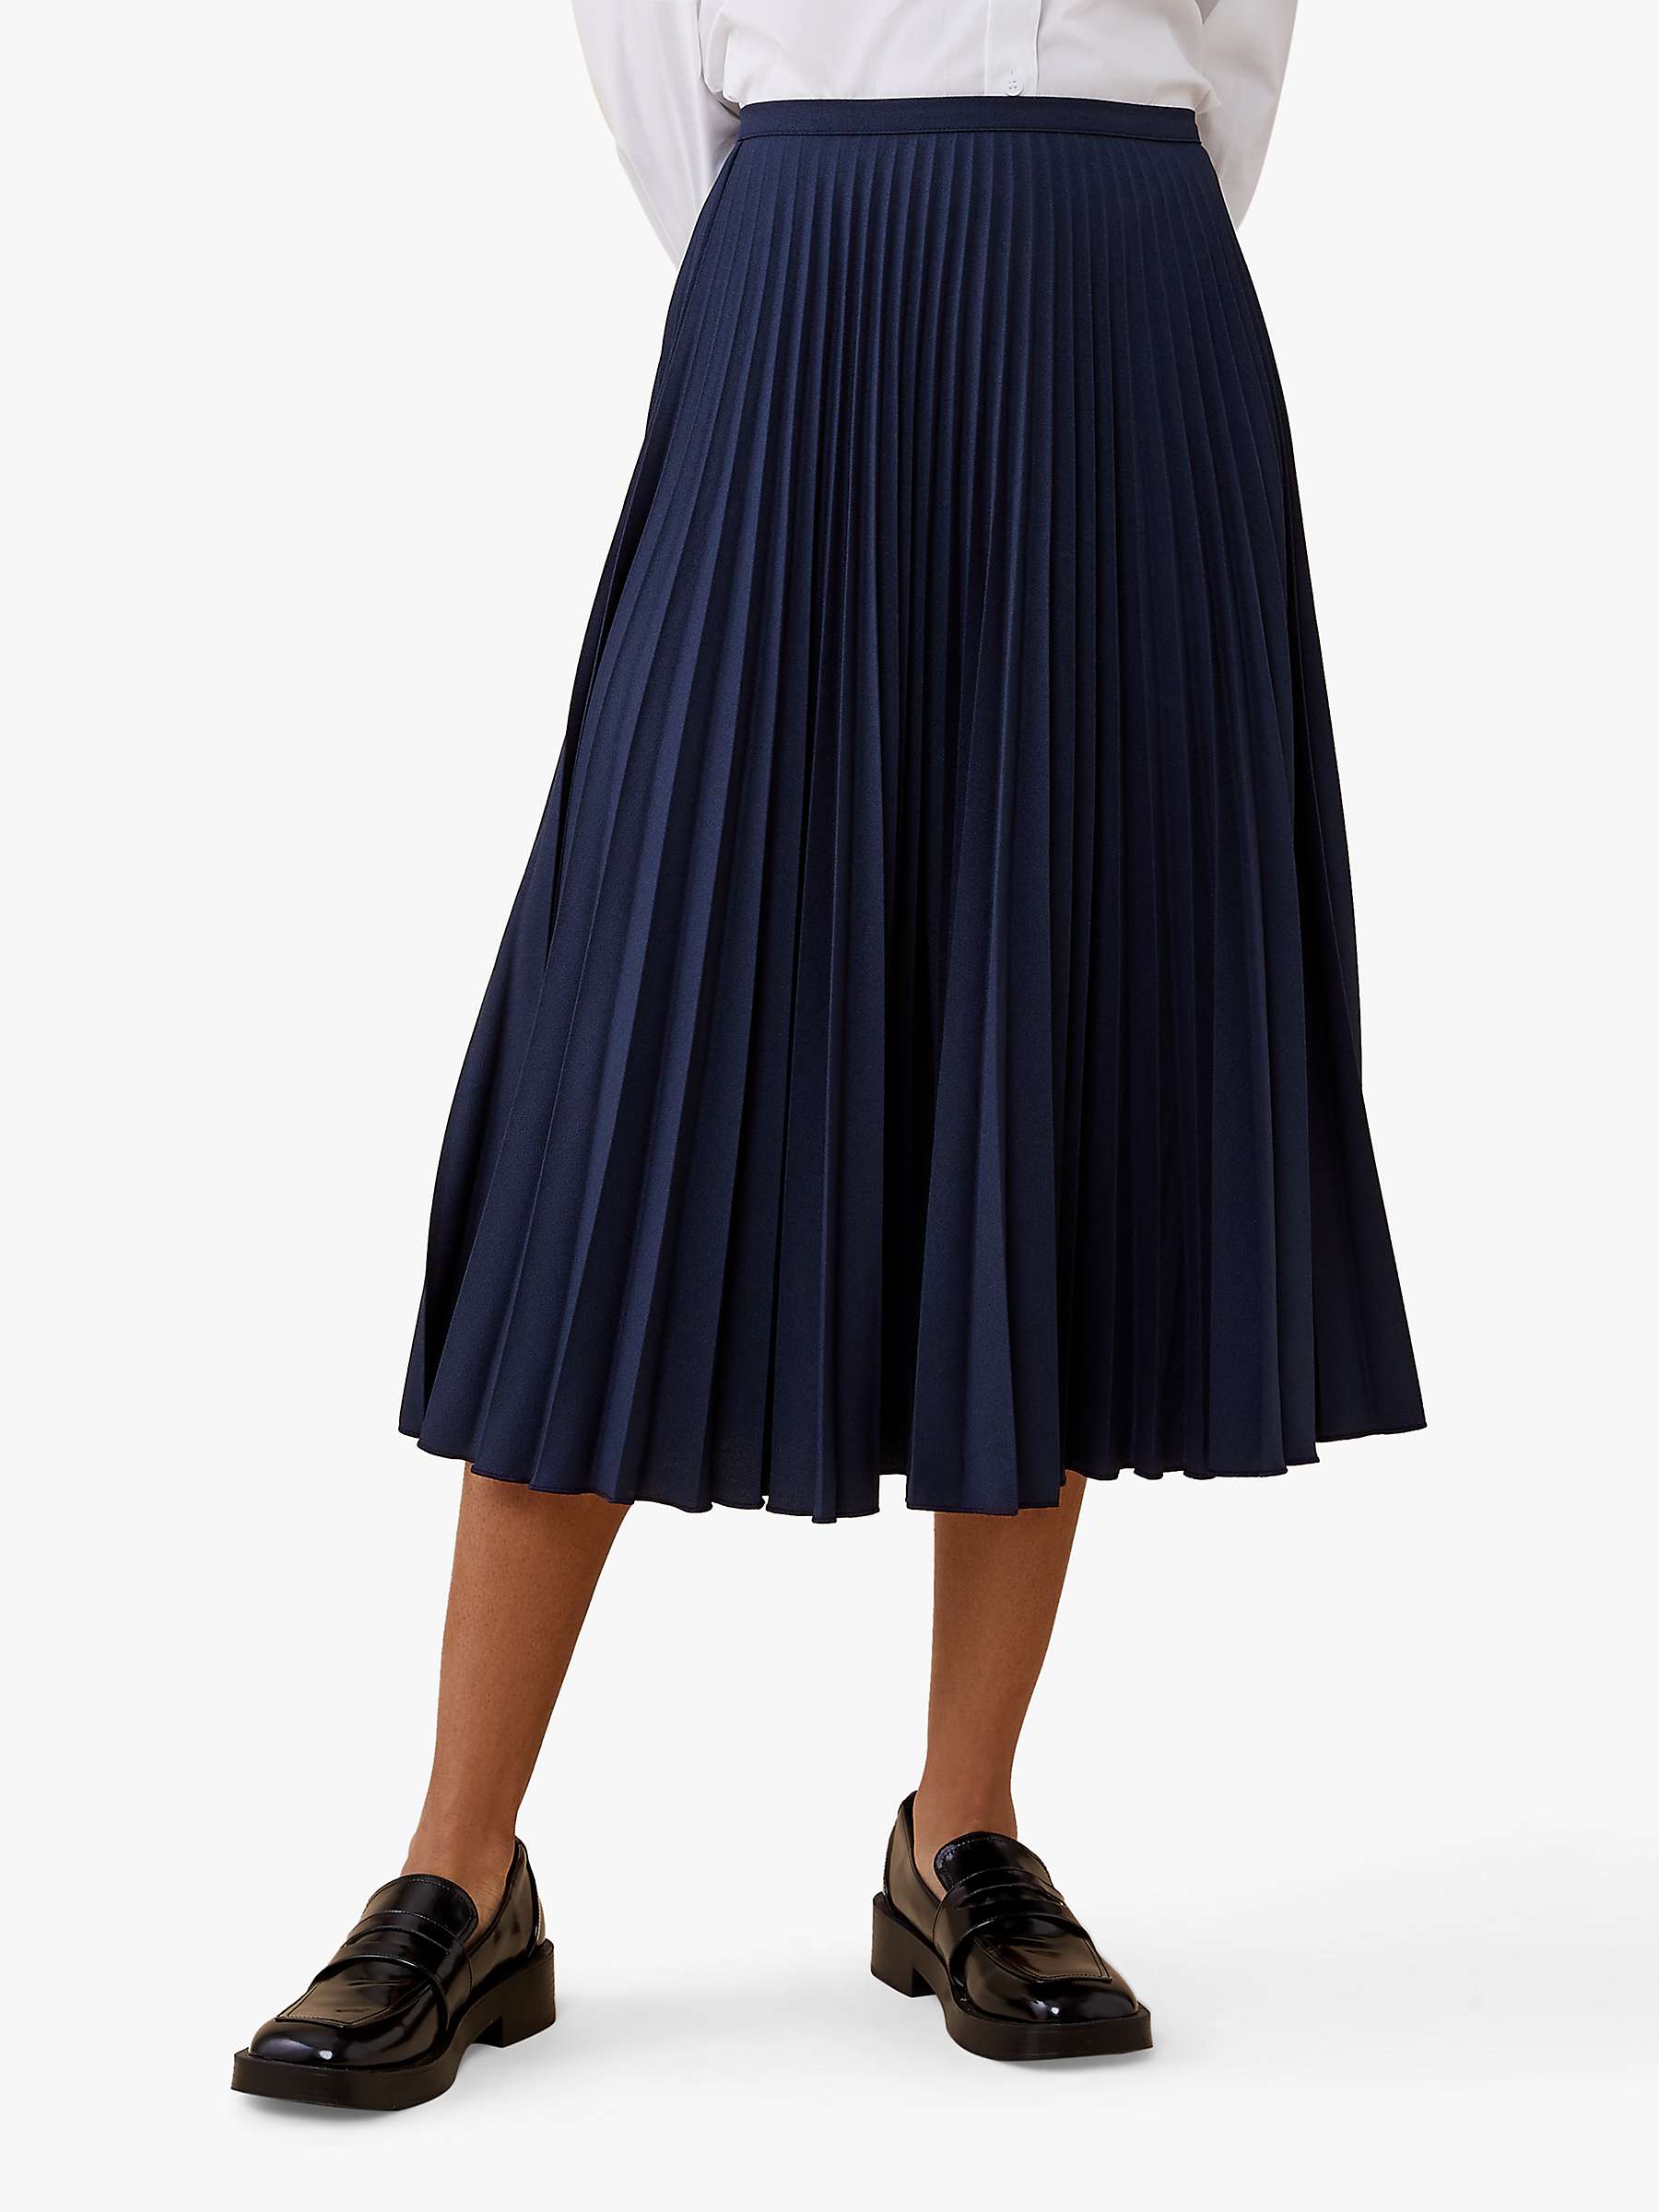 Finery Lottie Pleated Midi Skirt, Navy at John Lewis & Partners